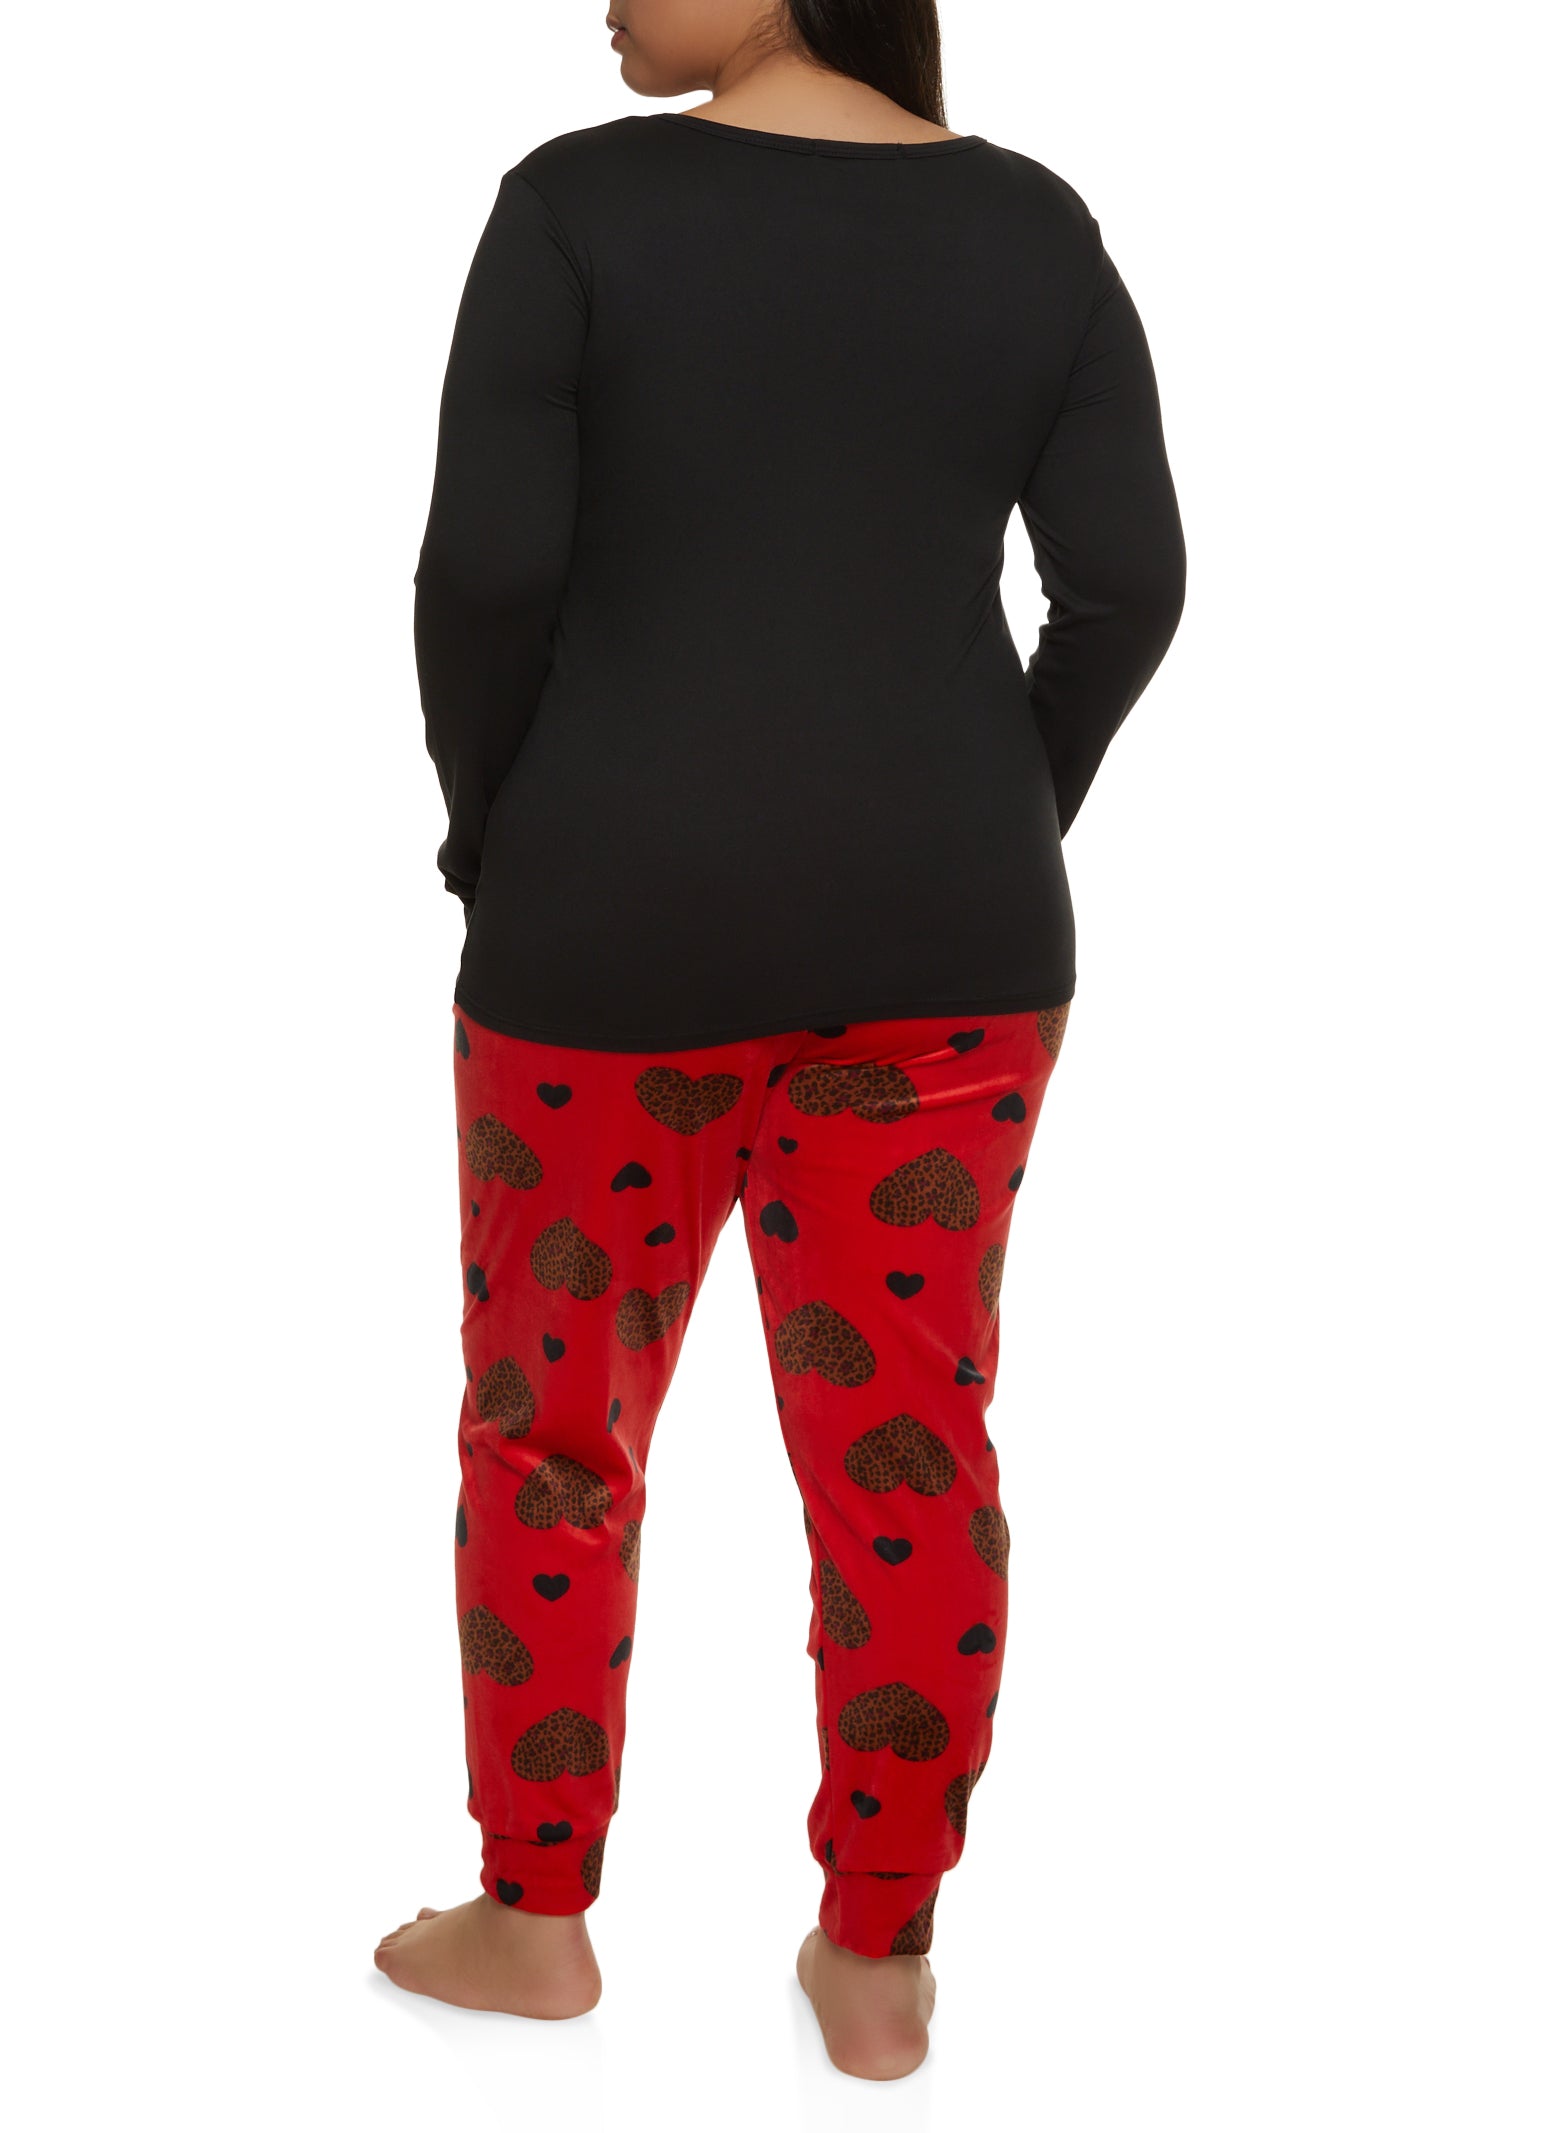 Mickey Minnie Mouse Hearts Valentine's Day Women's Leggings TC Plus Size  12-20 | eBay